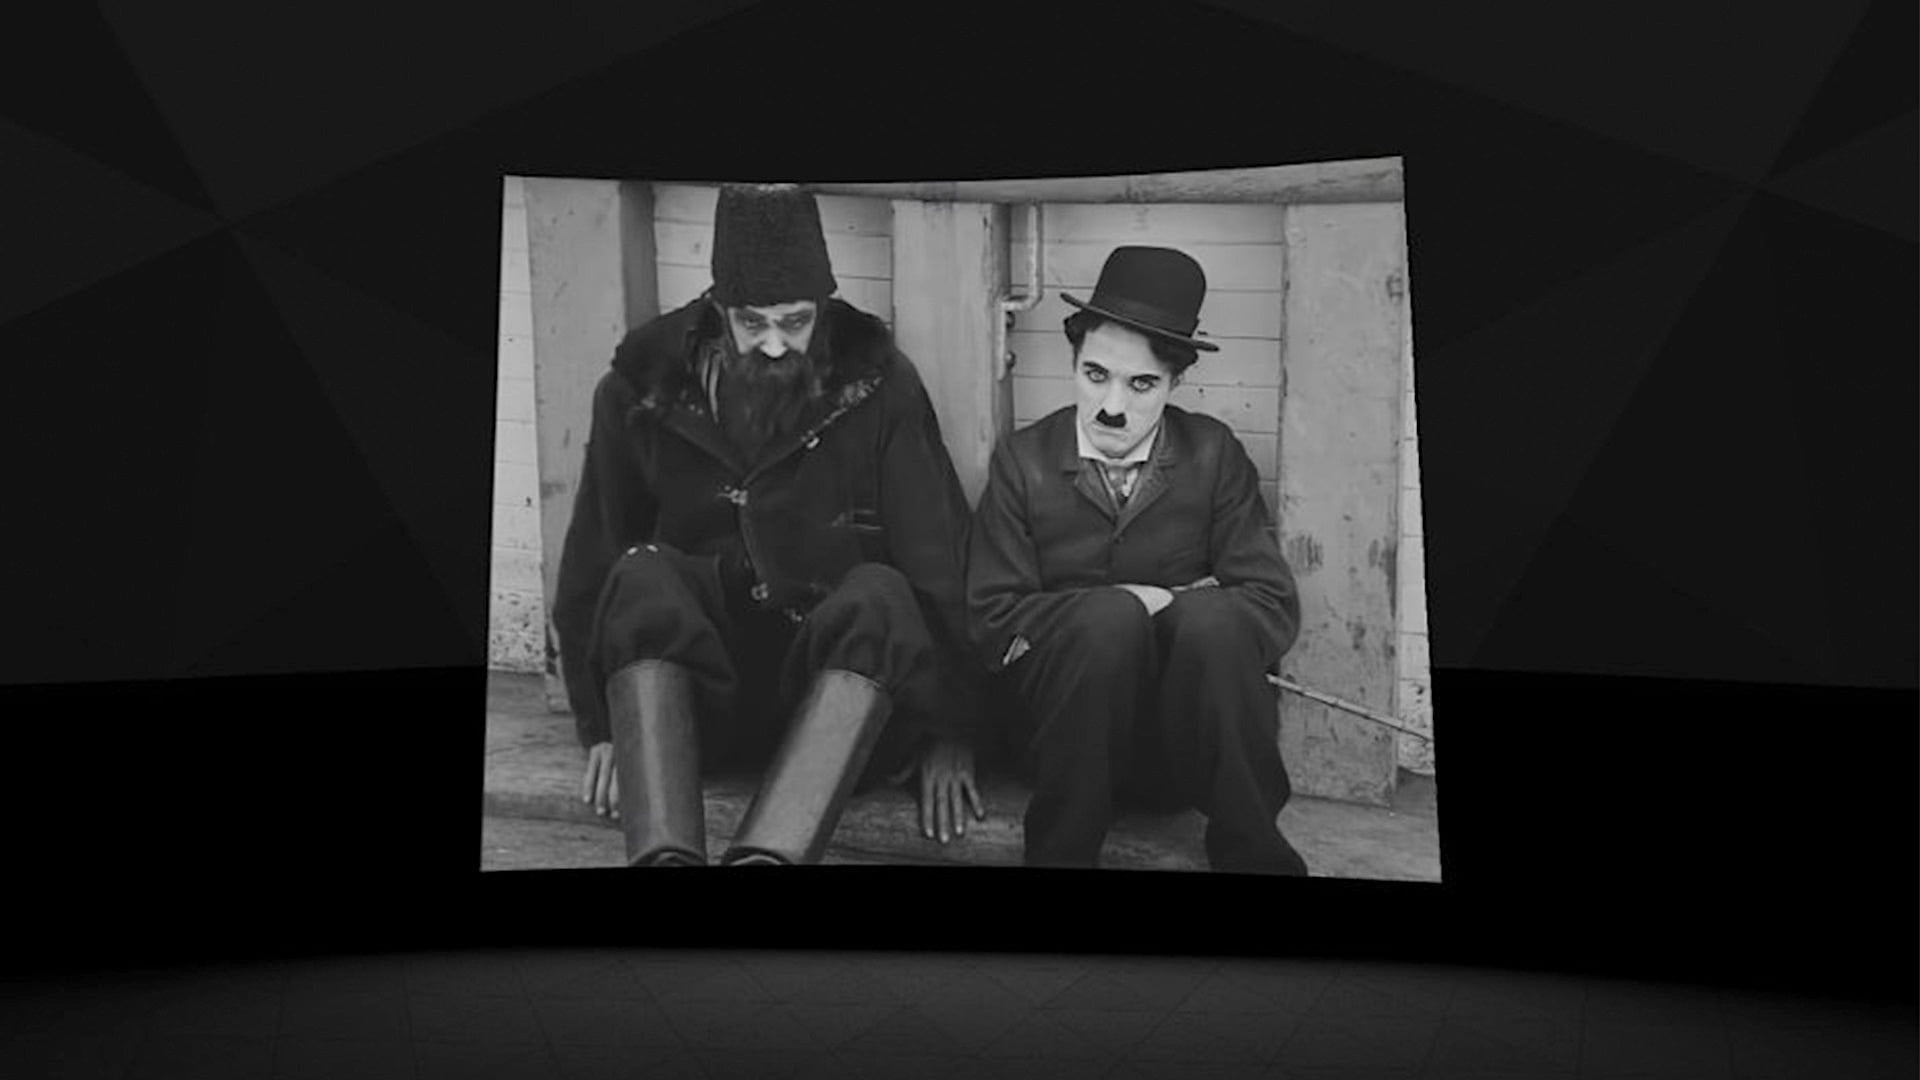 AI turns Charlie Chaplin classic into a 3D movie